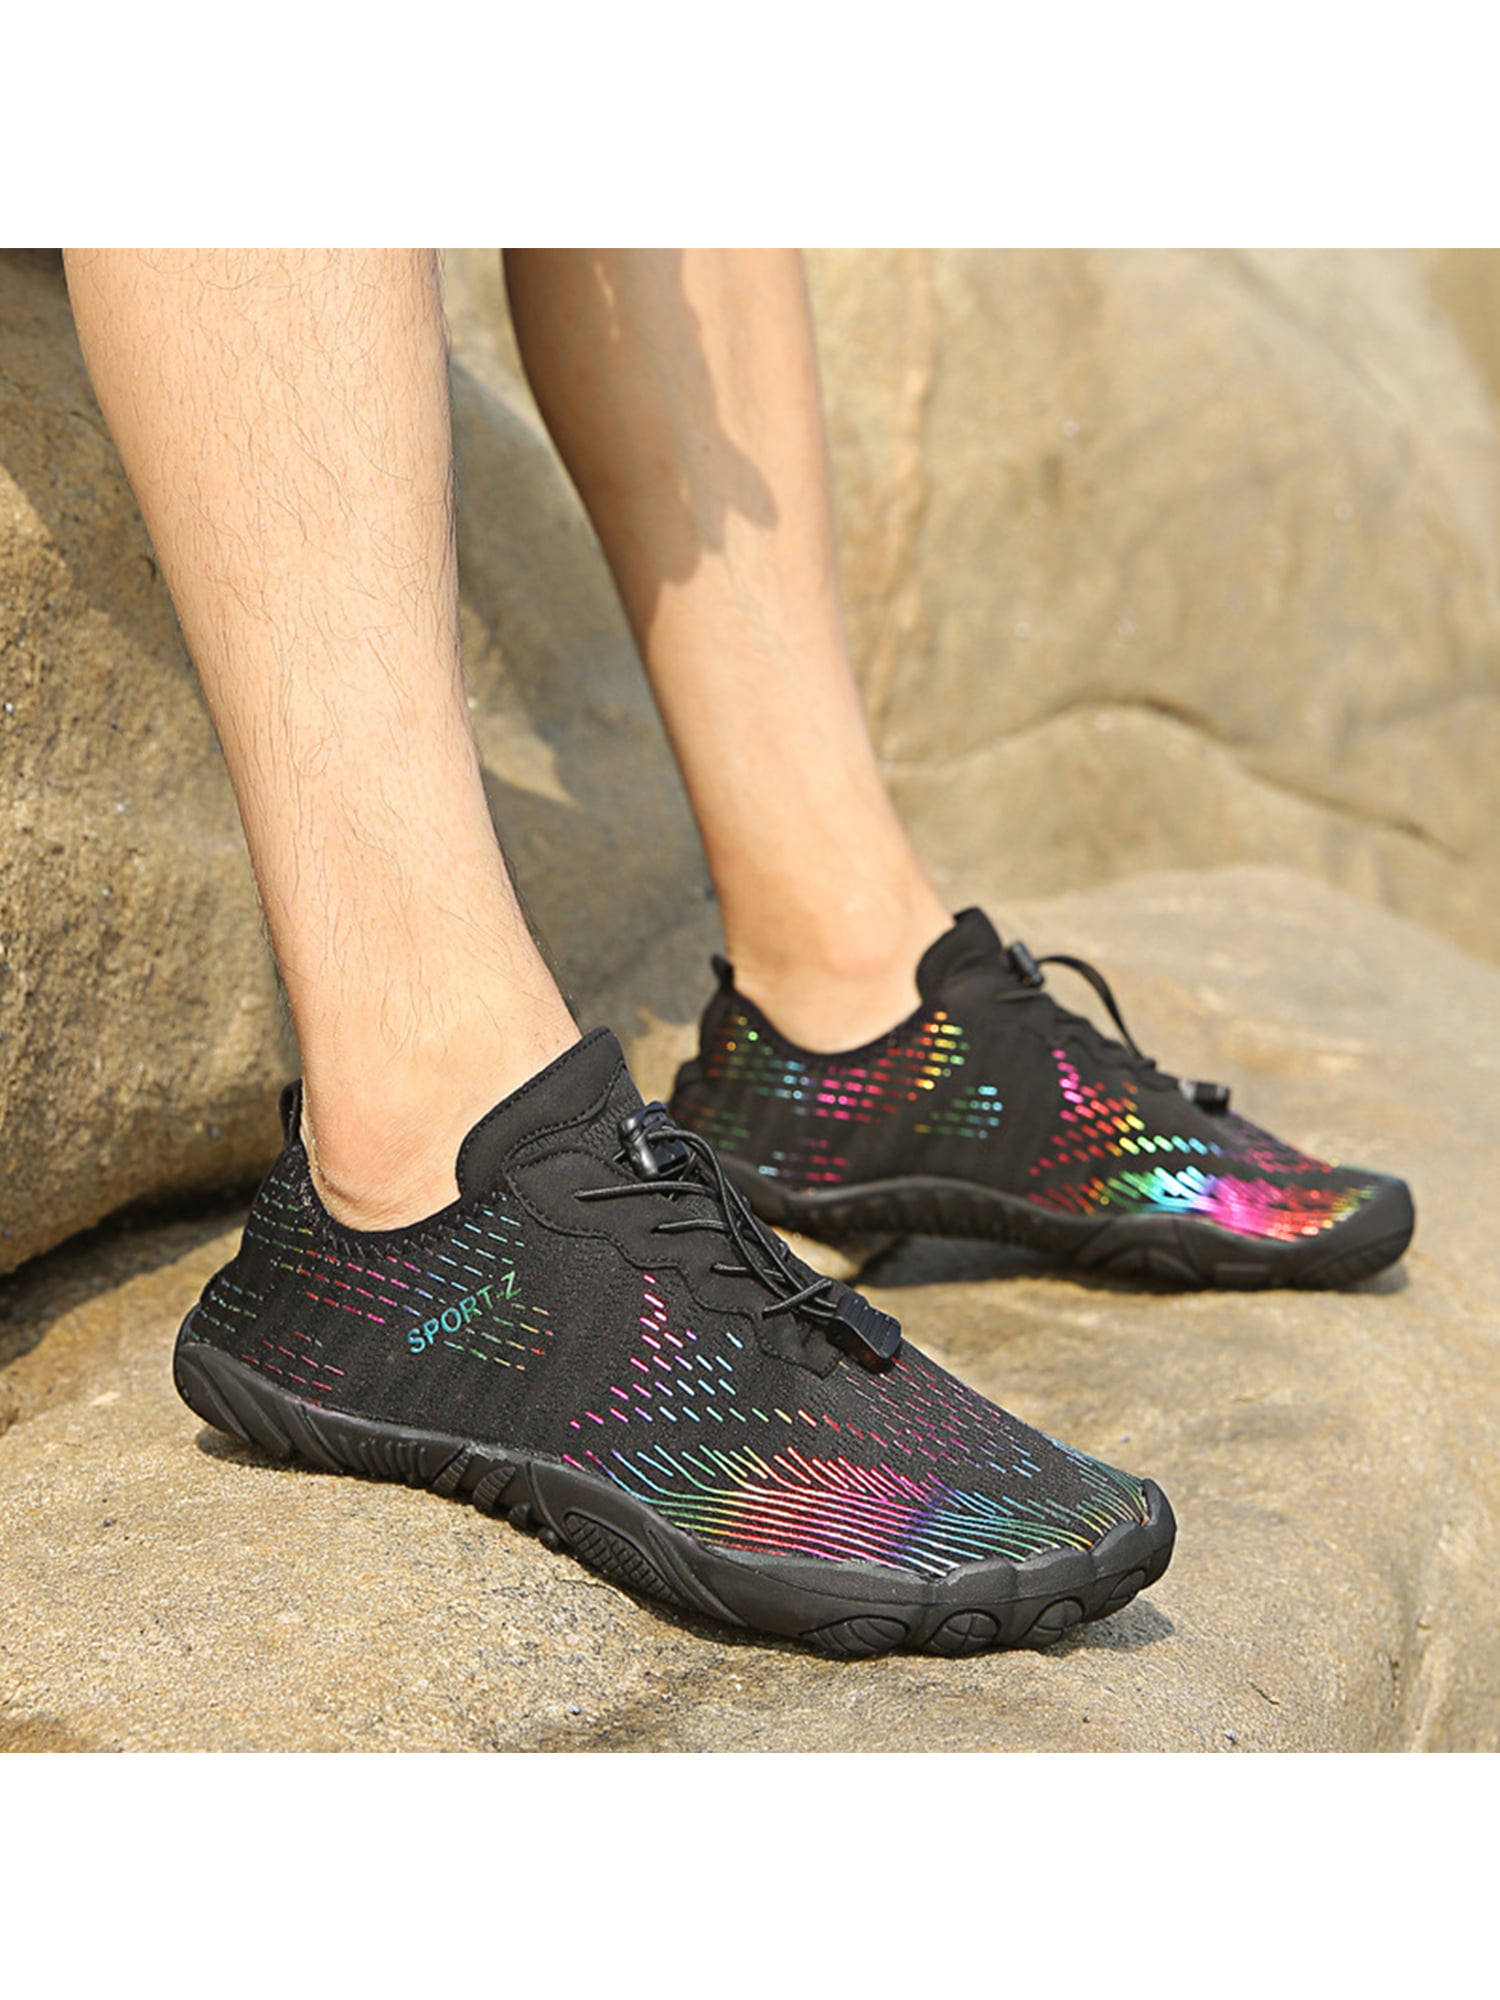 Women Men Water Shoes Aqua Socks Diving Socks Wetsuit Non-slip Swim Beach Adults 